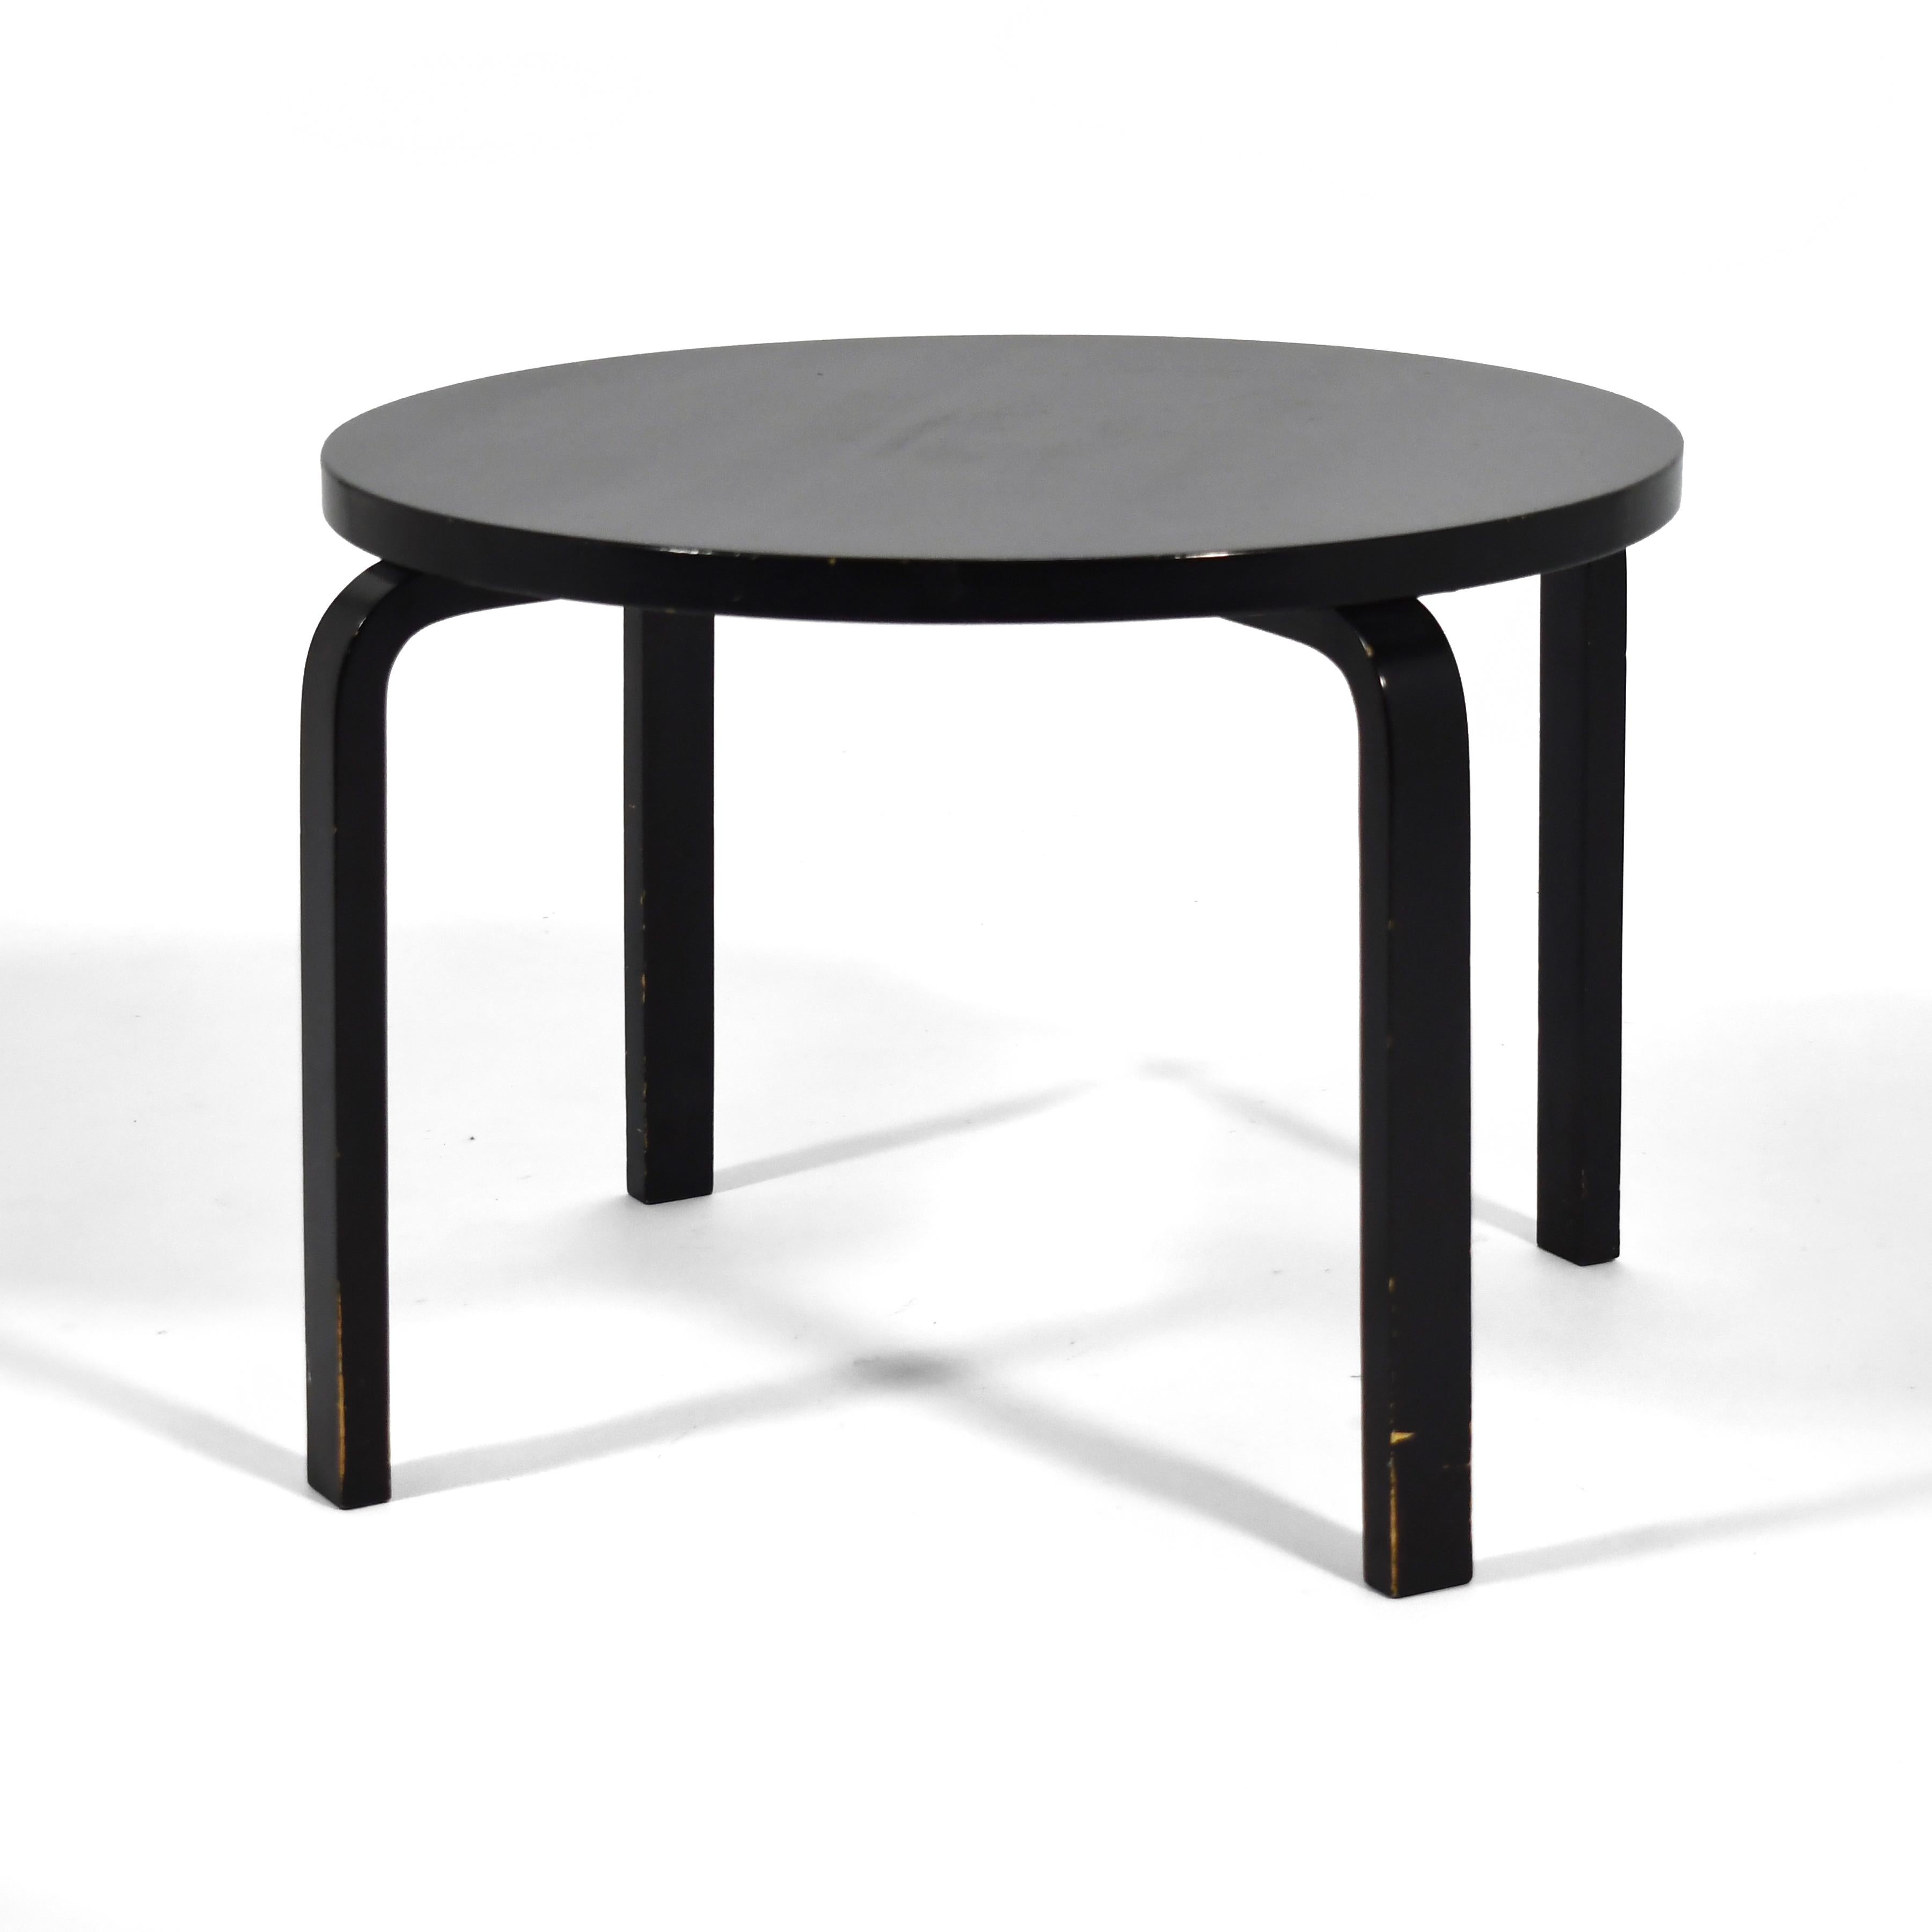 Finnish Alvar Aalto Table by Artek For Sale